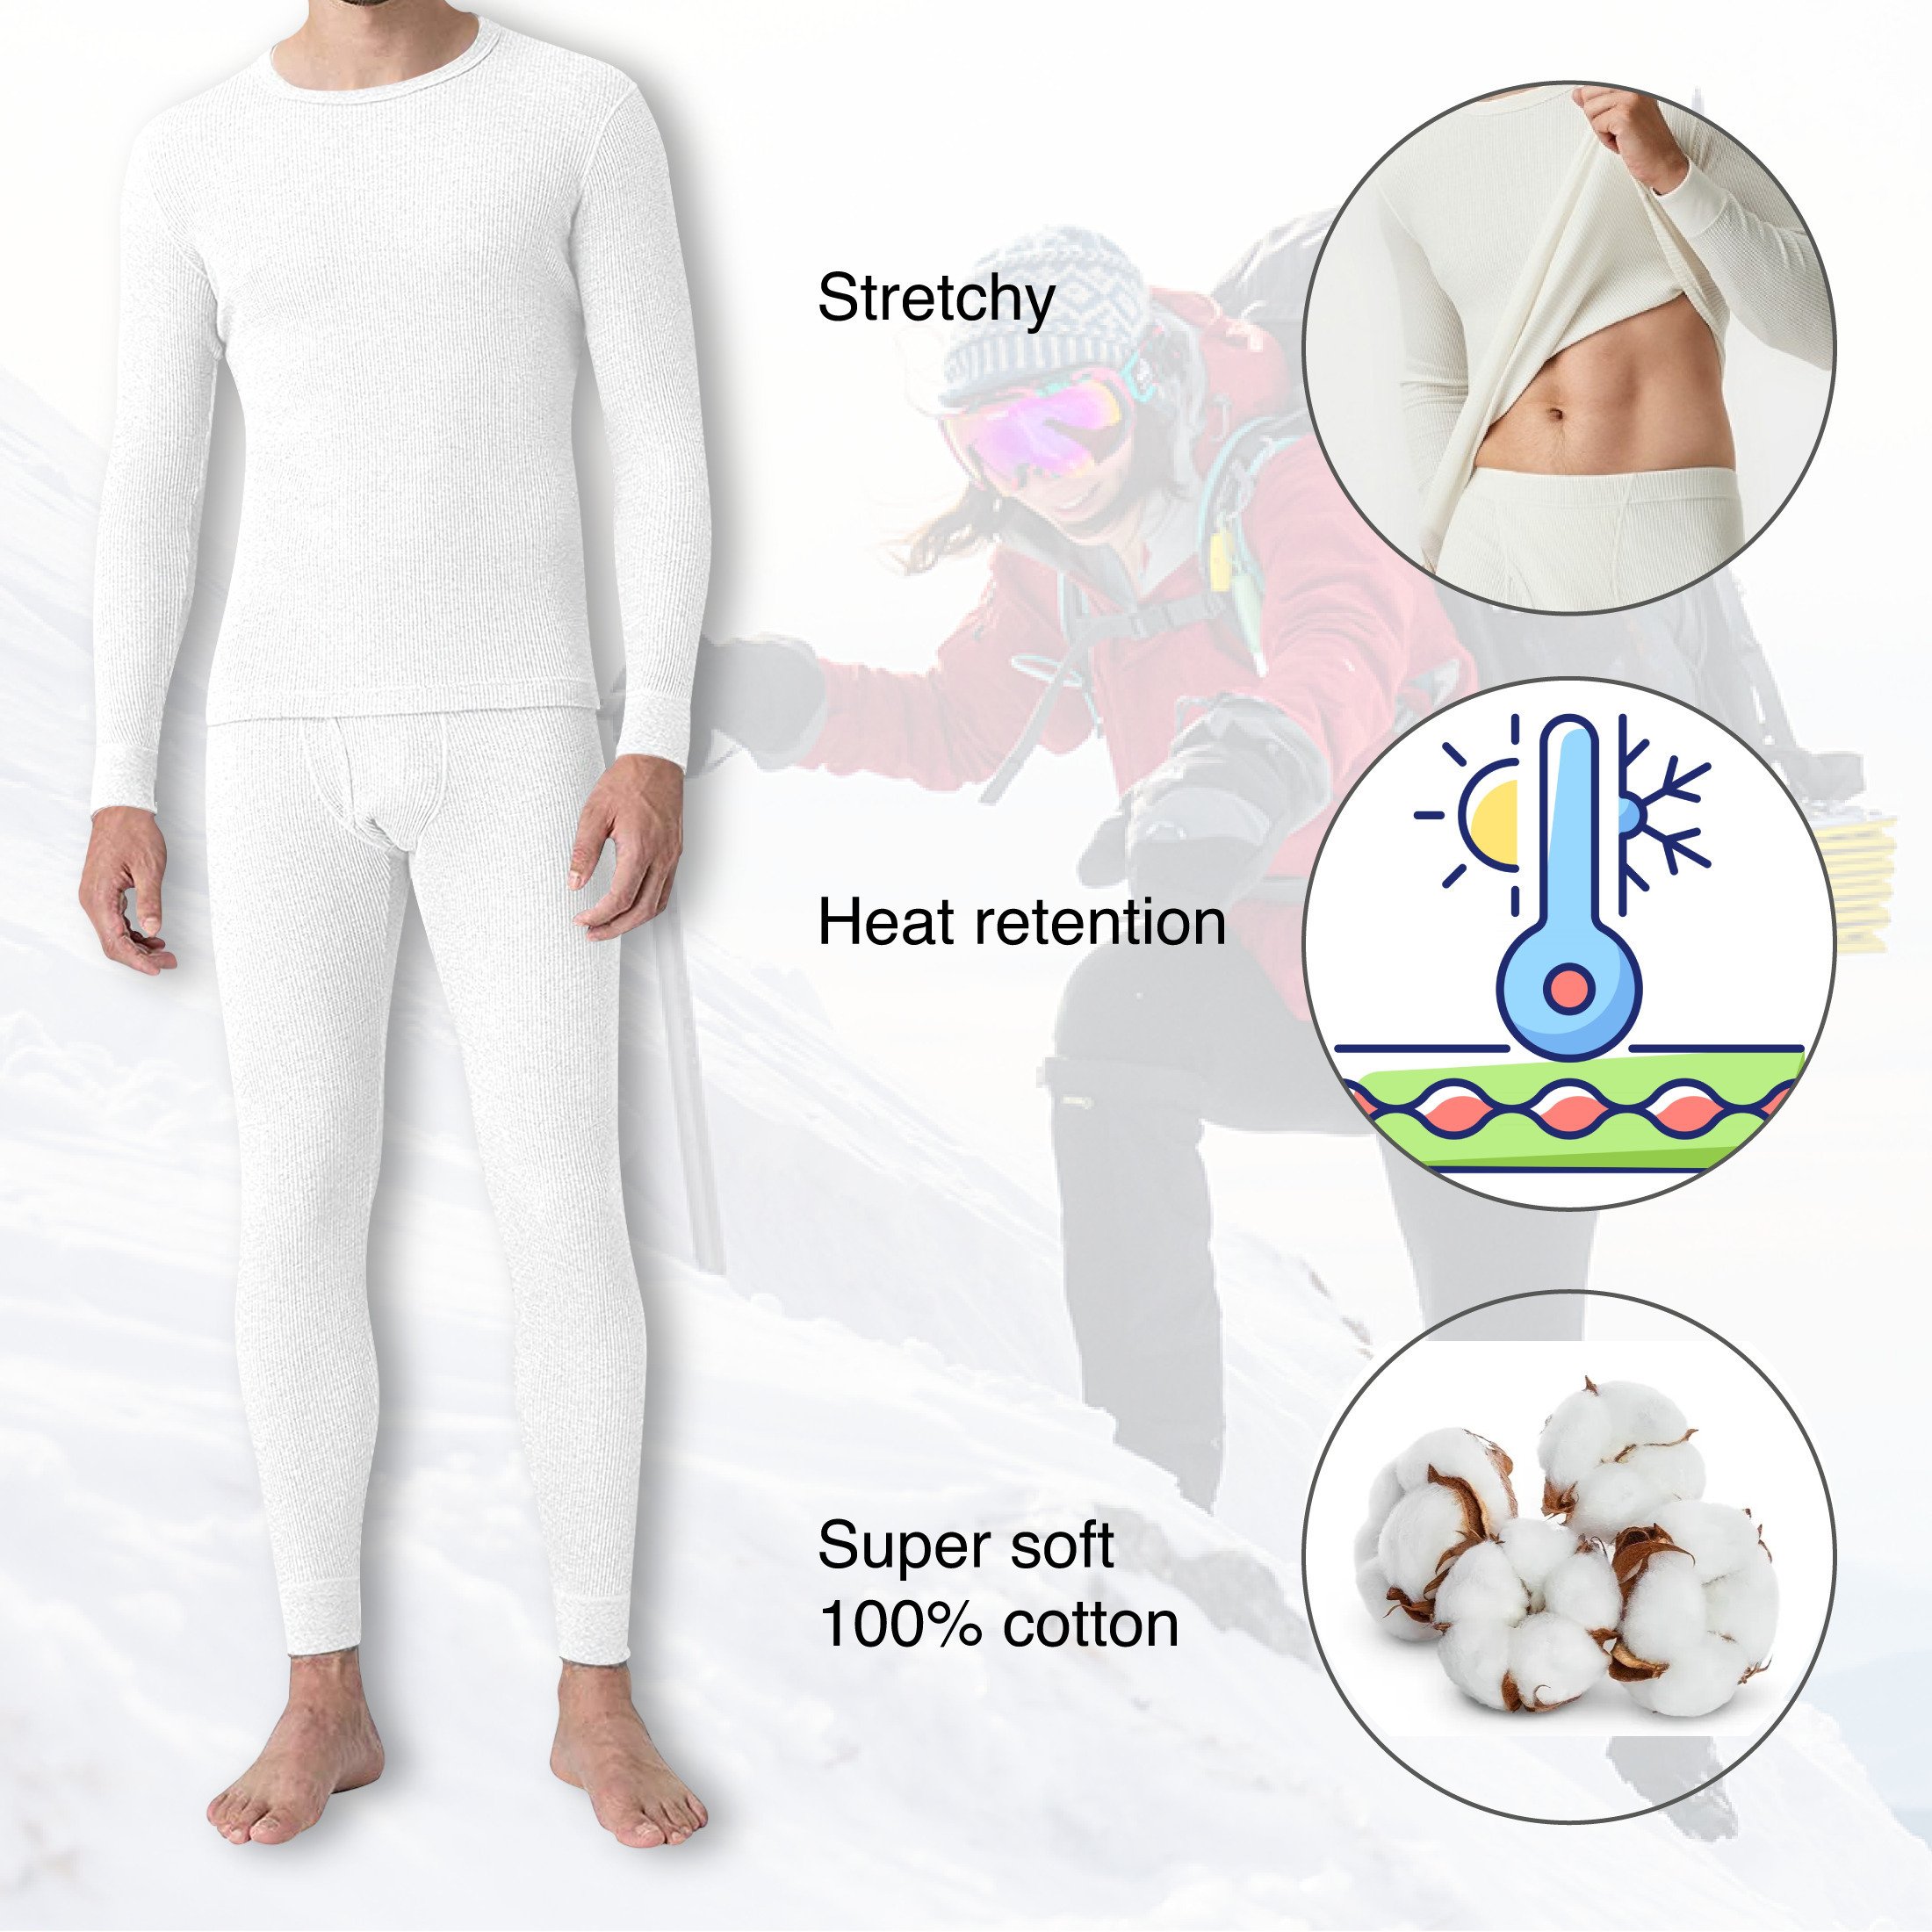 2-Sets: Men's Super Soft Cotton Waffle Knit Winter Thermal Underwear Set - Grey & Navy, Medium